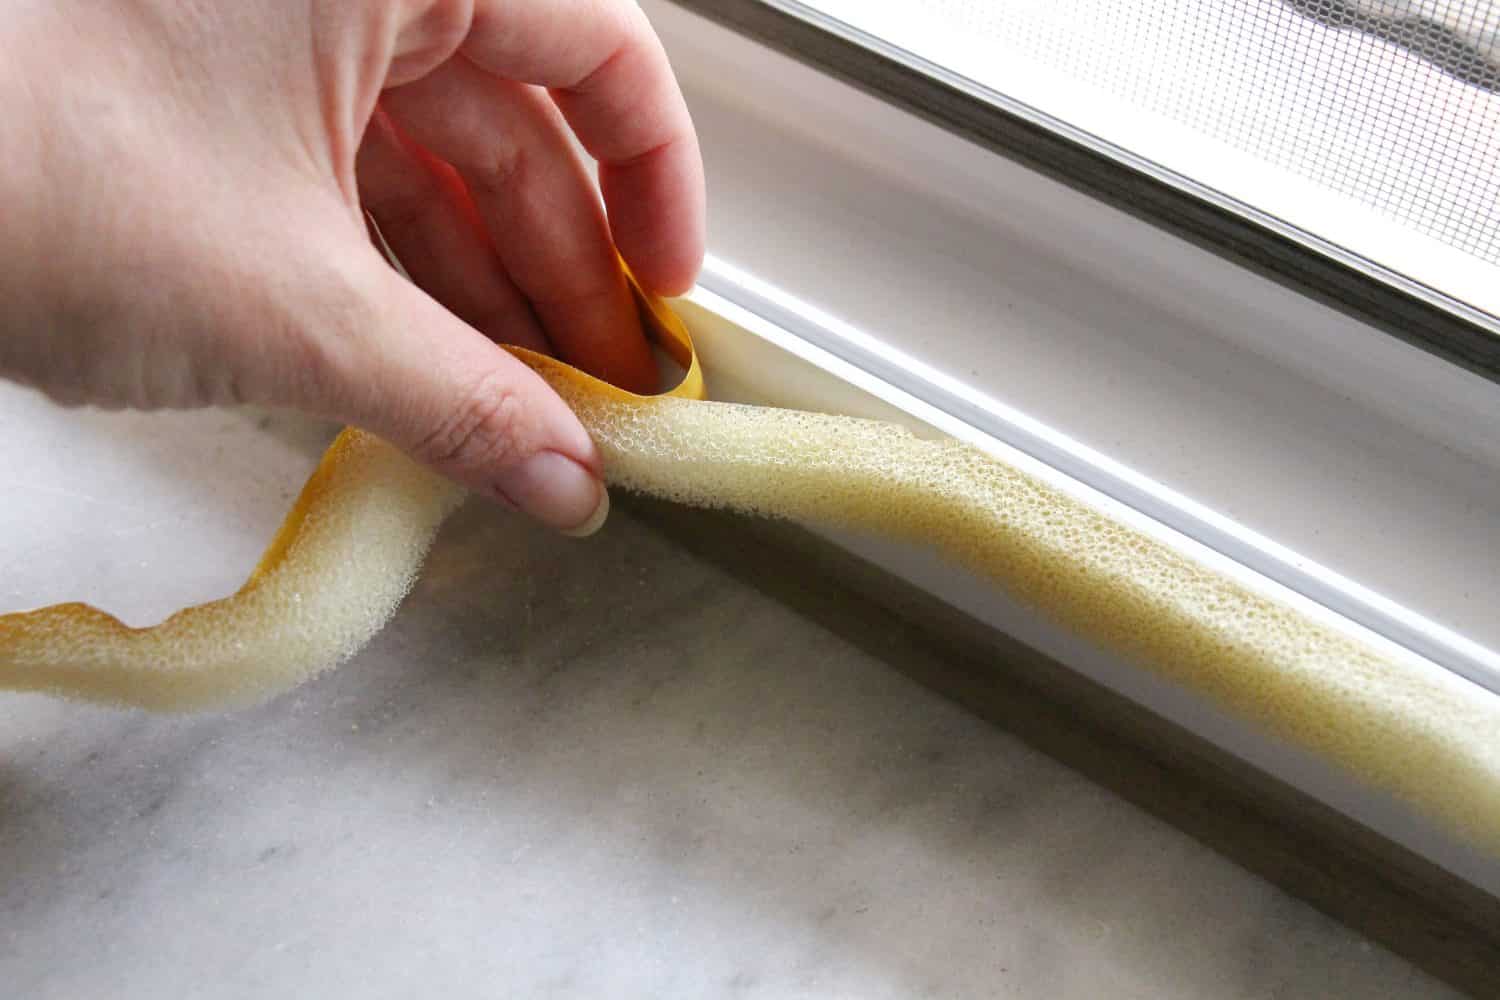 applying sponge tape or window seal to the PVC window for heat insulation